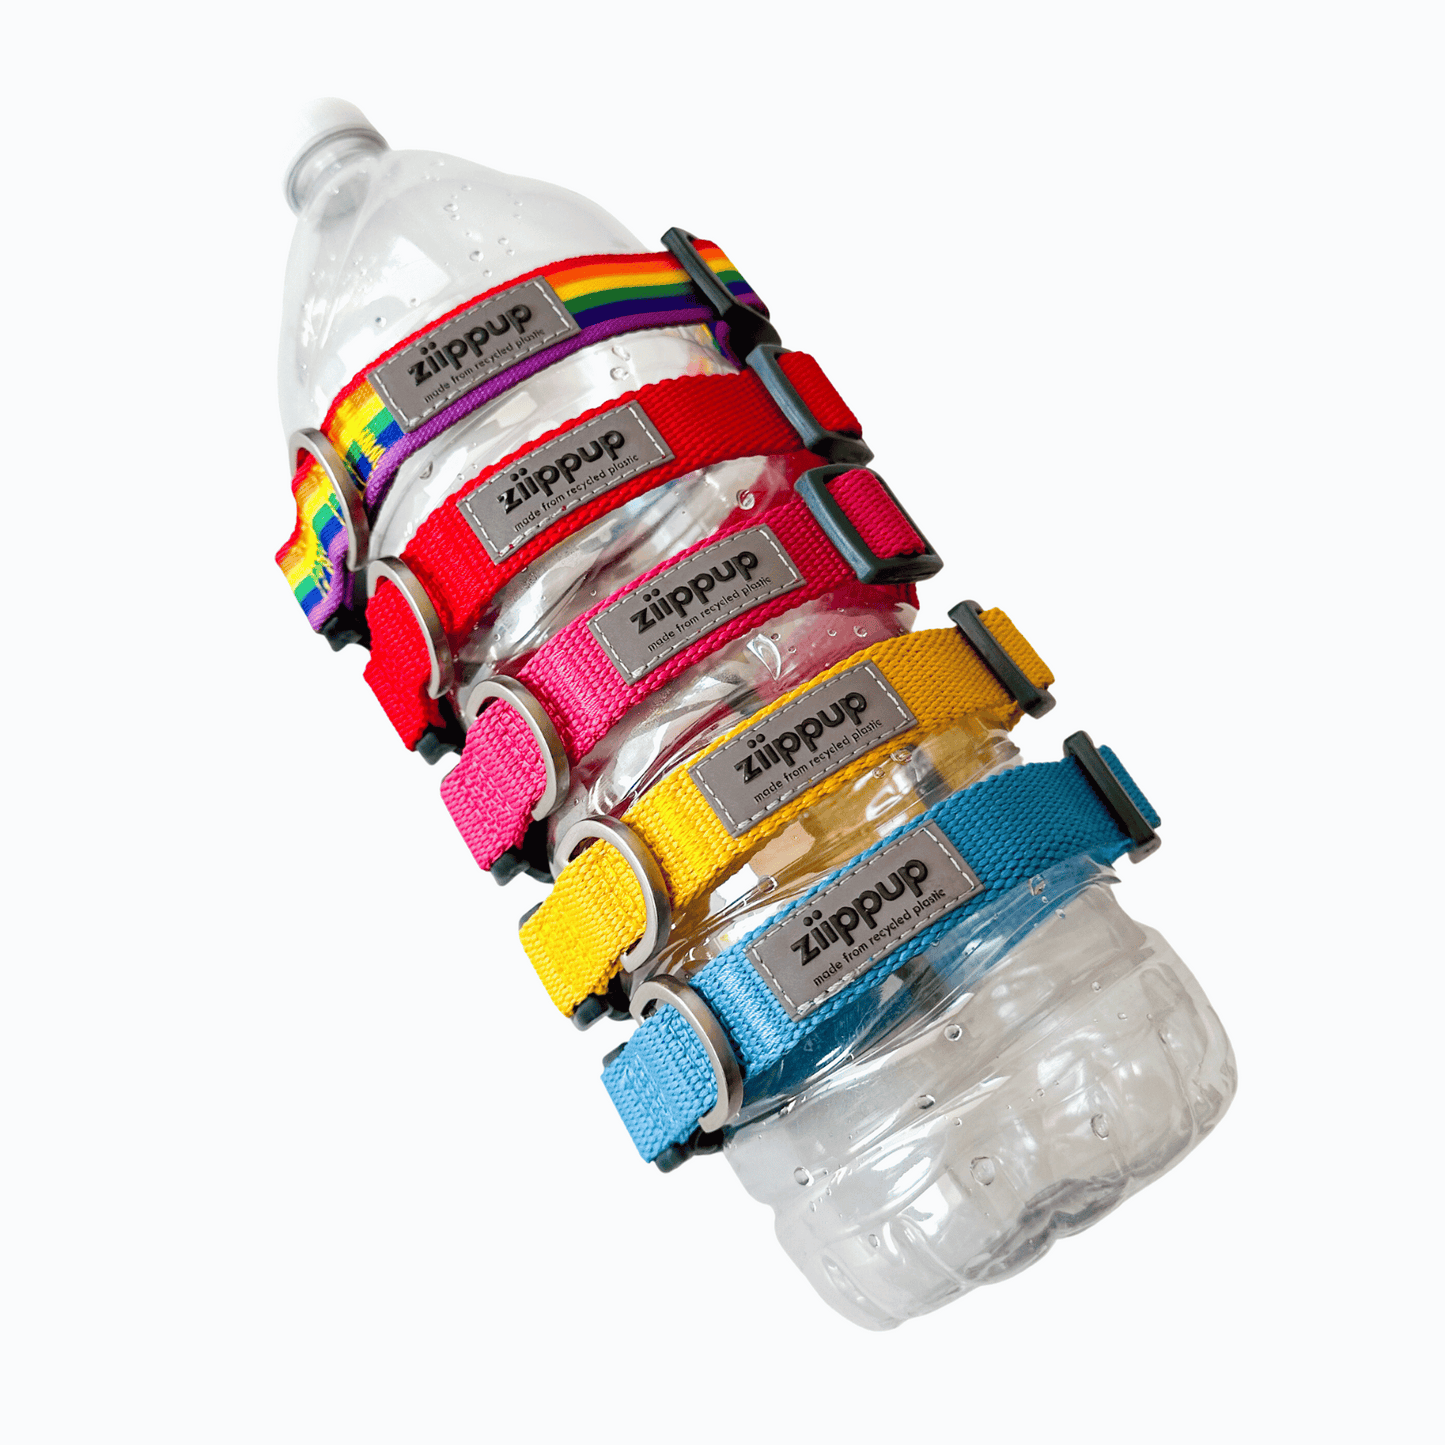 Ziippup dog collars on plastic bottle